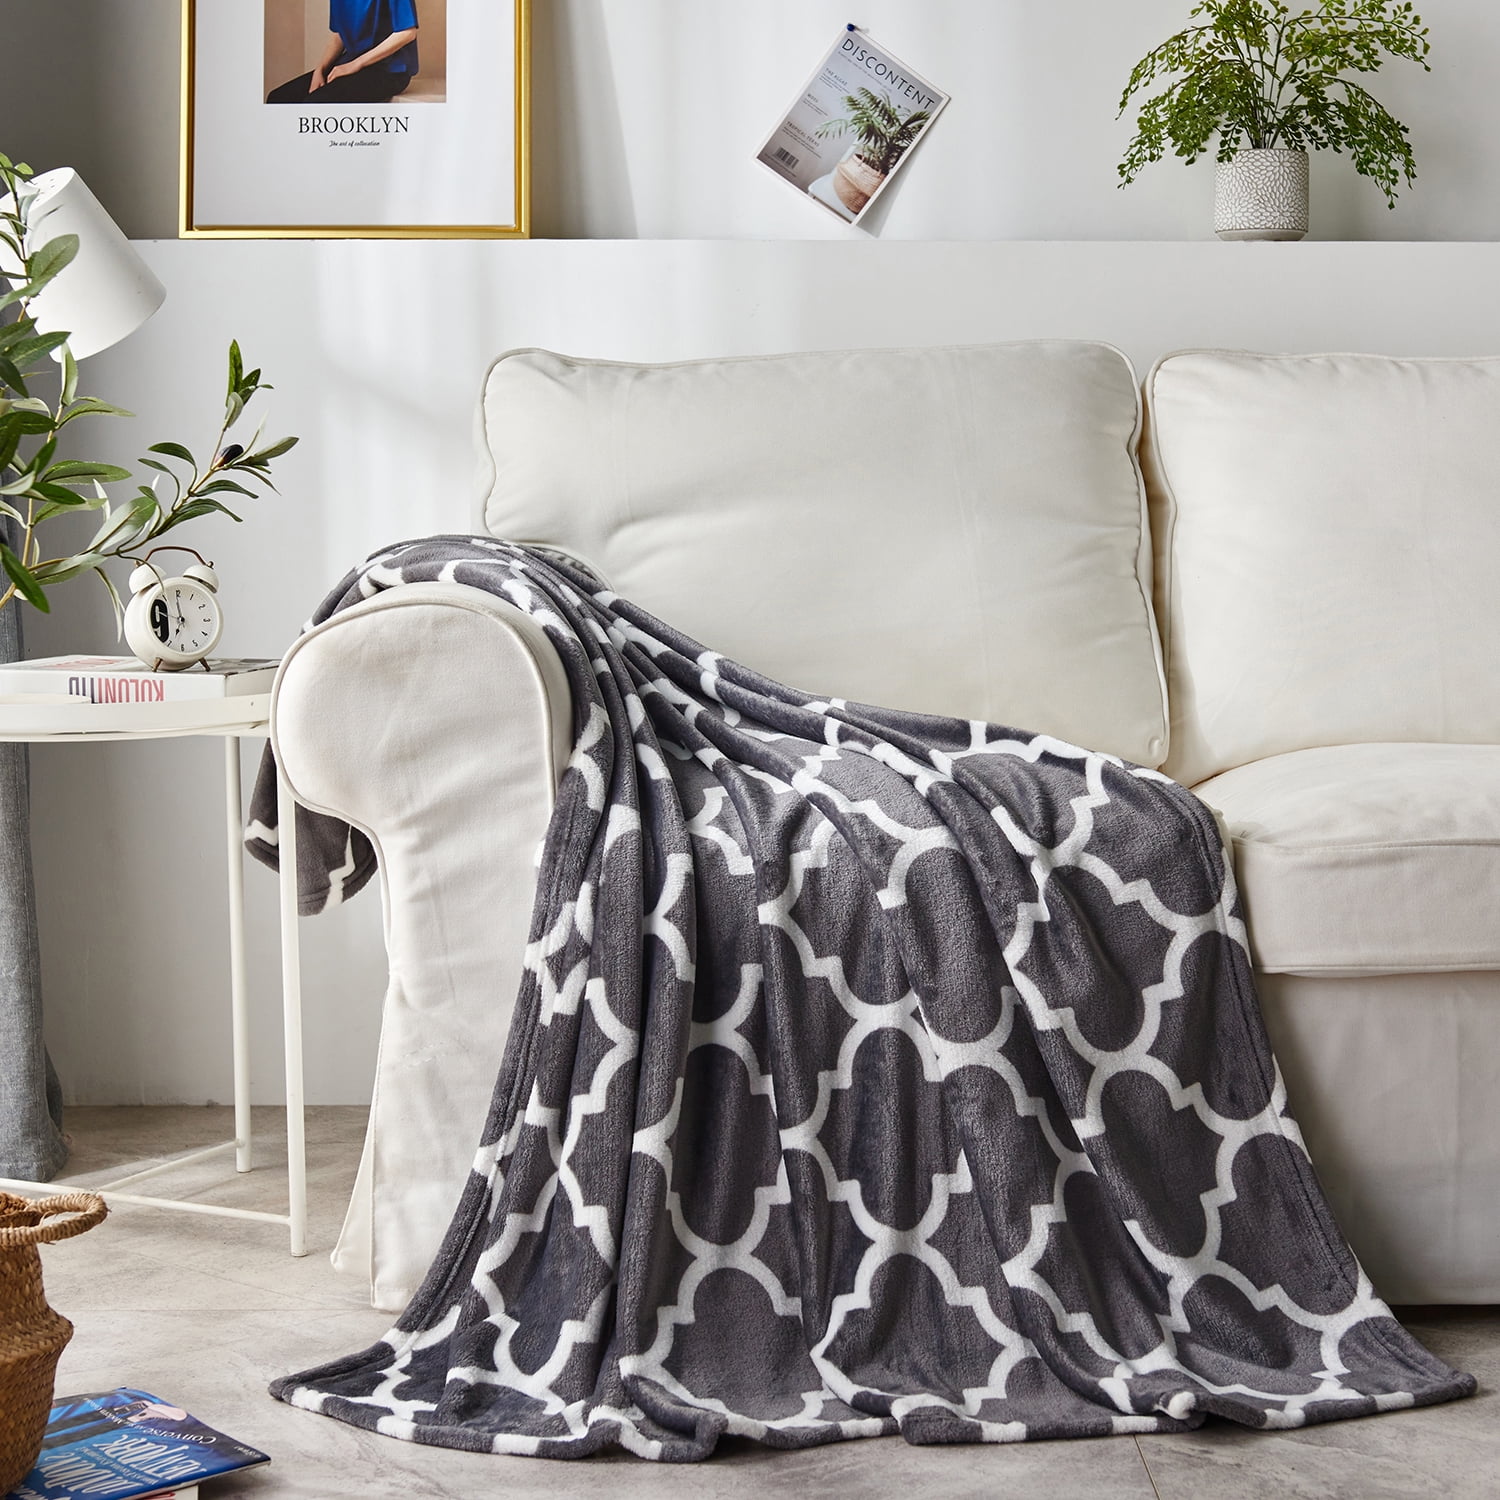 Super Soft Micro Fleece Lightweight Flannel Blanket Warm Cozy for Sofa Lap Travel Bed Throw Blanket,40x50 inch,Rainy Monday 